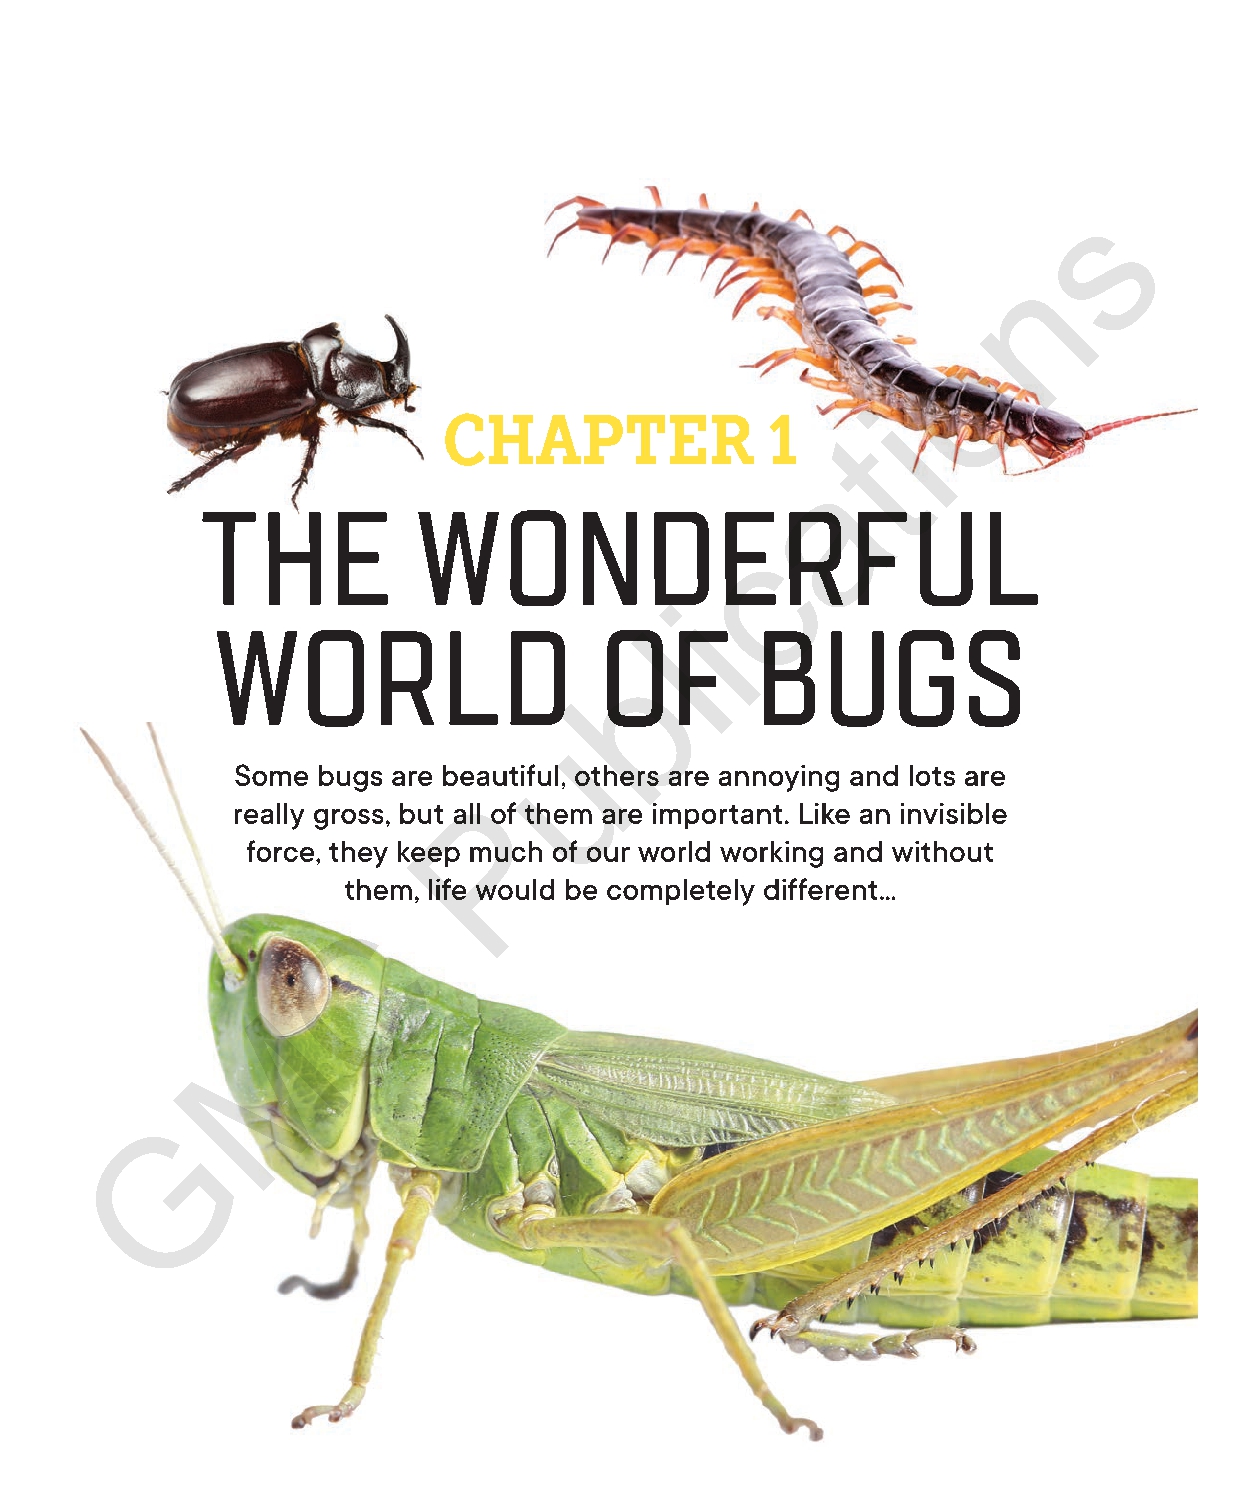 Factology: Bugs